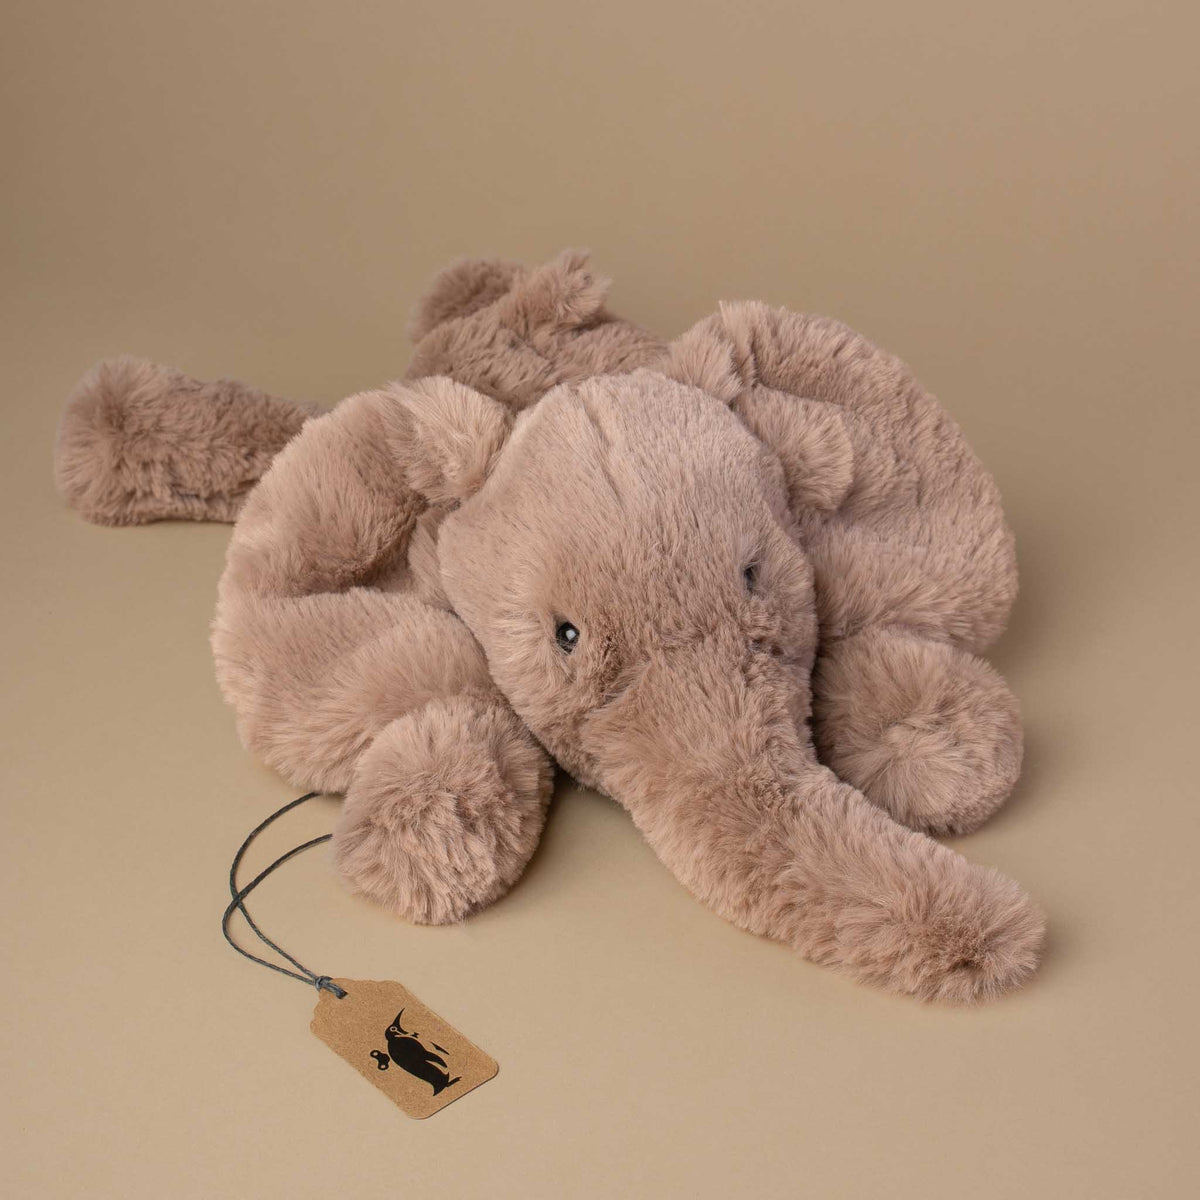 Jellycat Medium Smudge Elephant Kids Plush Stuffed Animal +